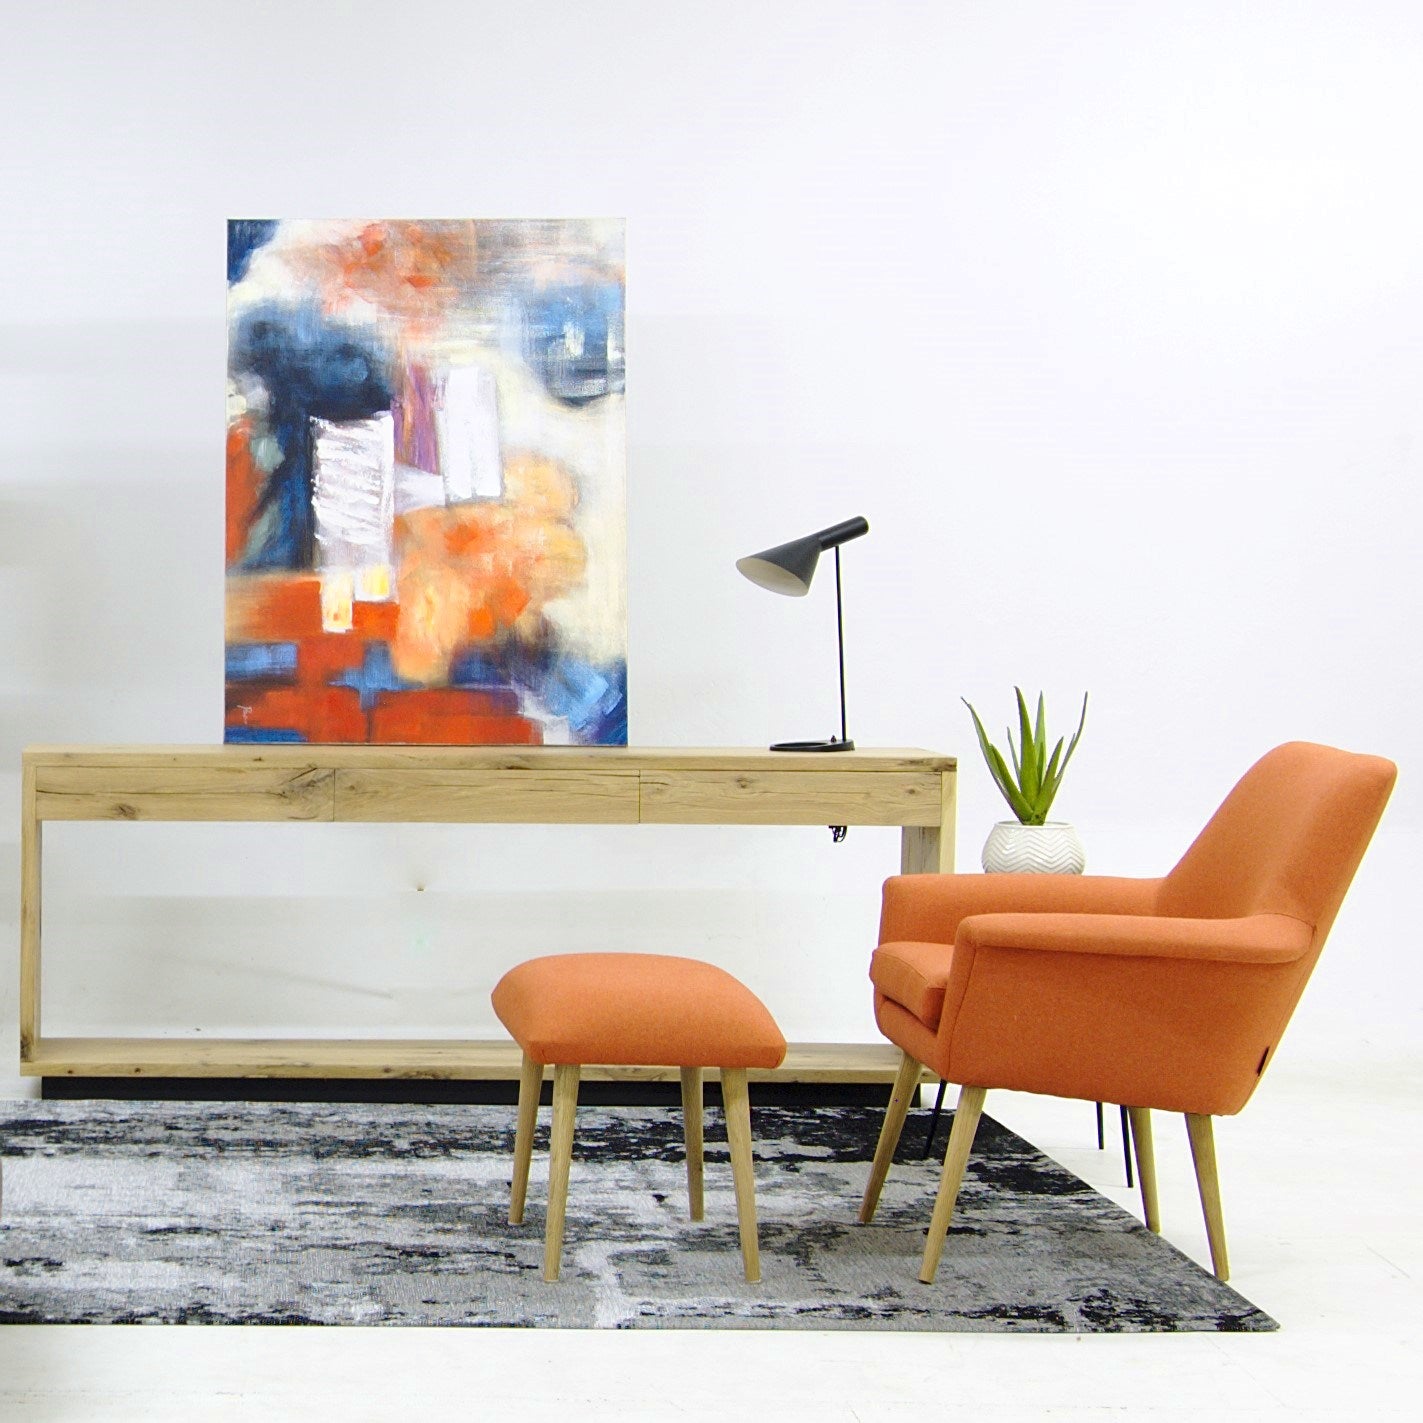 Eskola Chair - Oslo Furniture